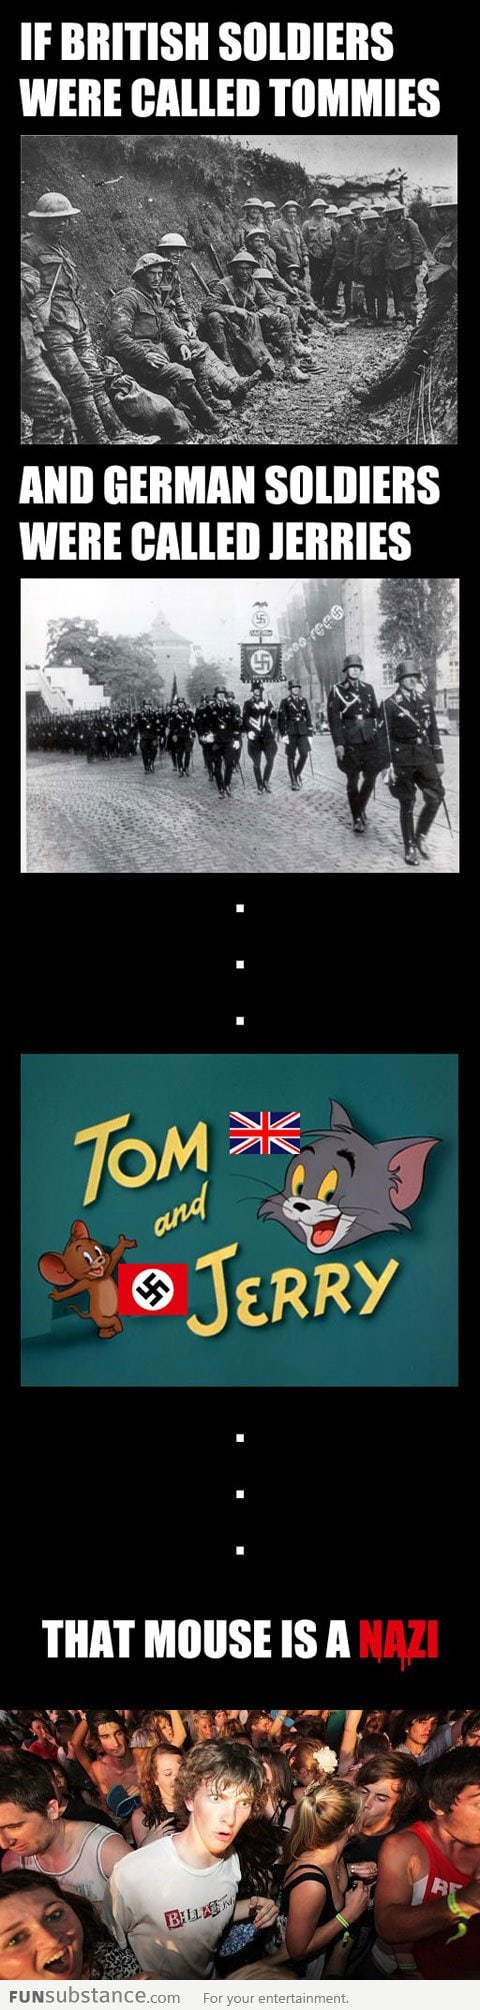 Tom and Jerry's hidden secret